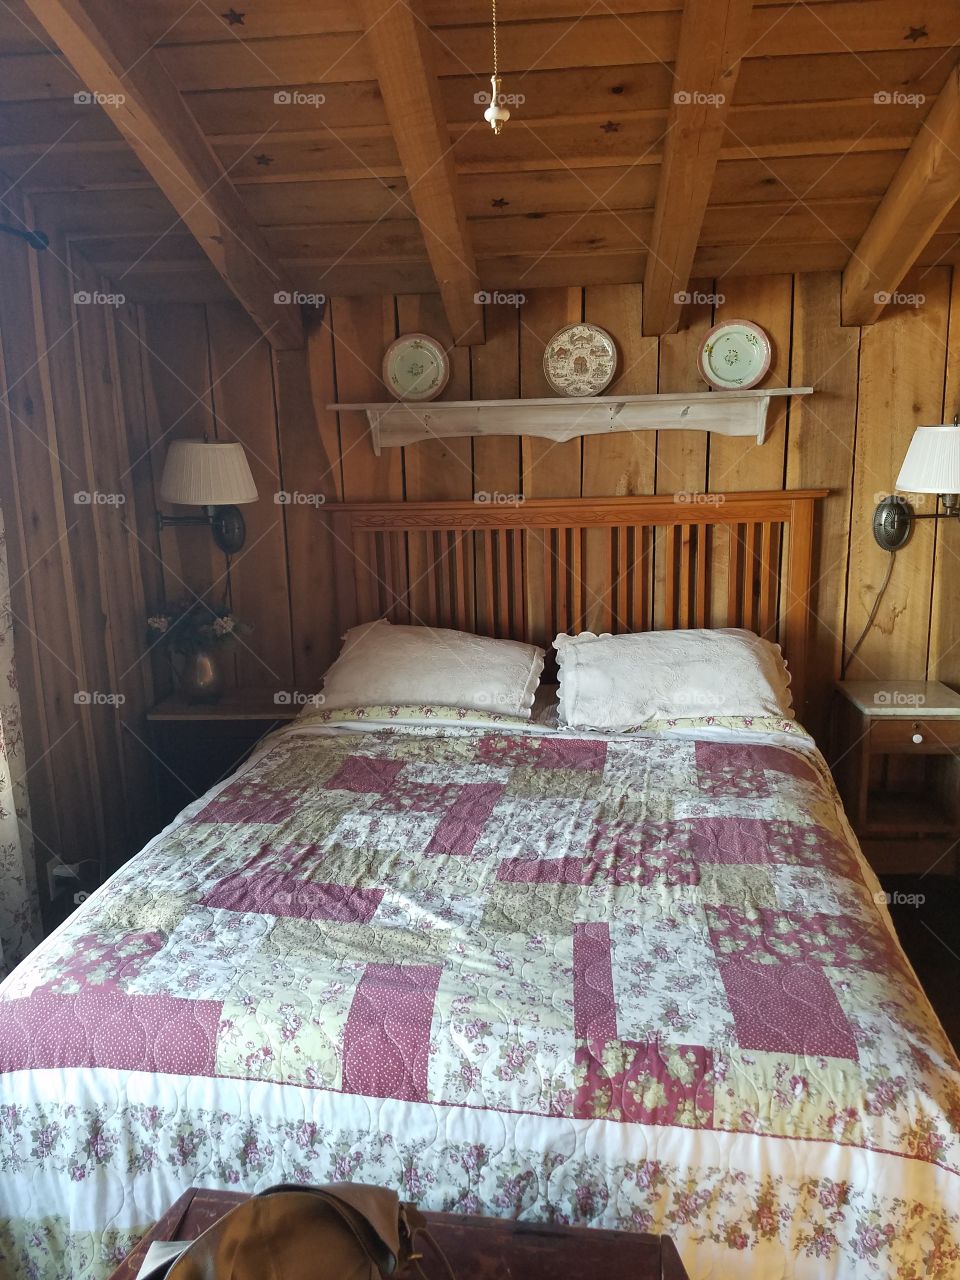 log cabin, old bed, quilt, pillows, shelf, decor, authentic, rustic, wood, original, lamps, nostalgic